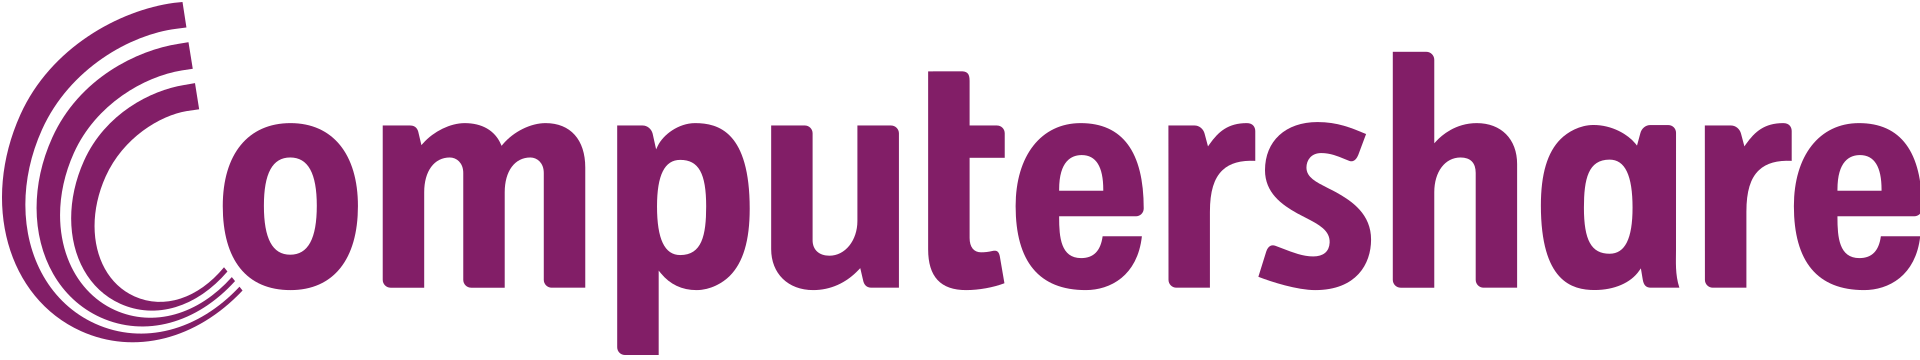 Computershare Brand Logo